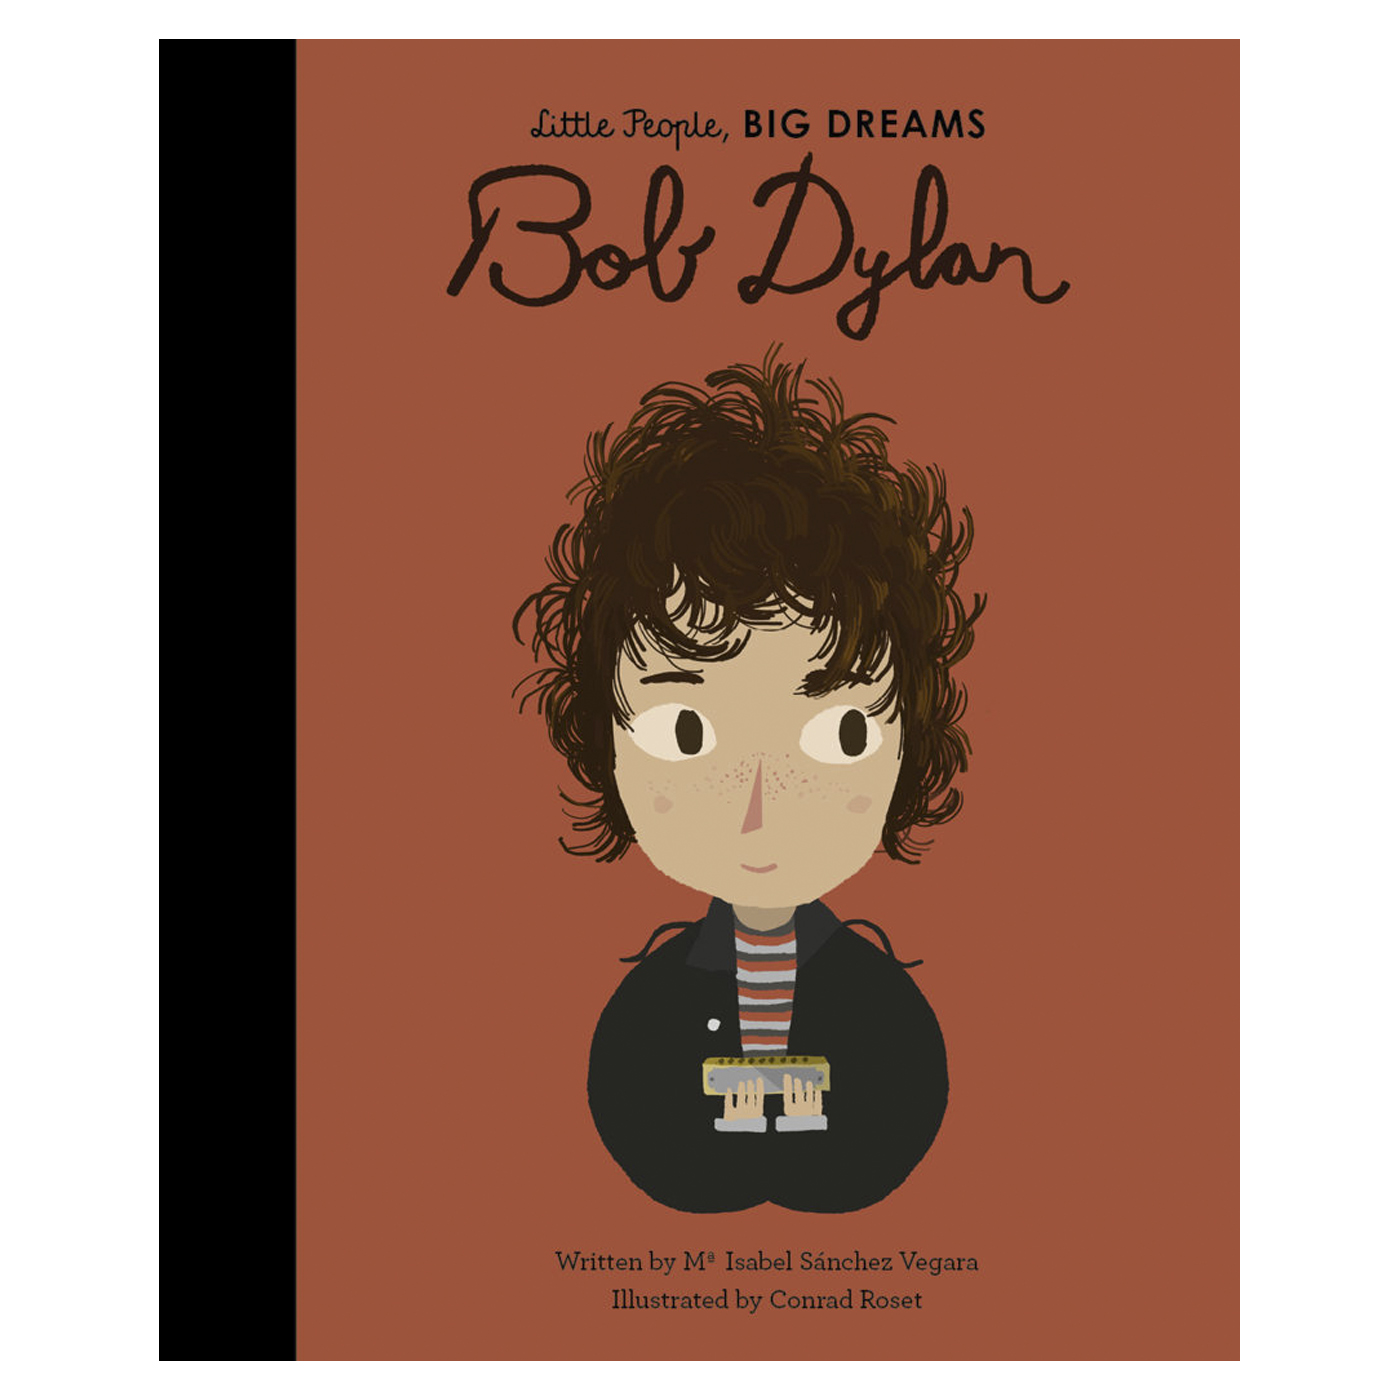  Little People Big Dreams: Bob Dylan